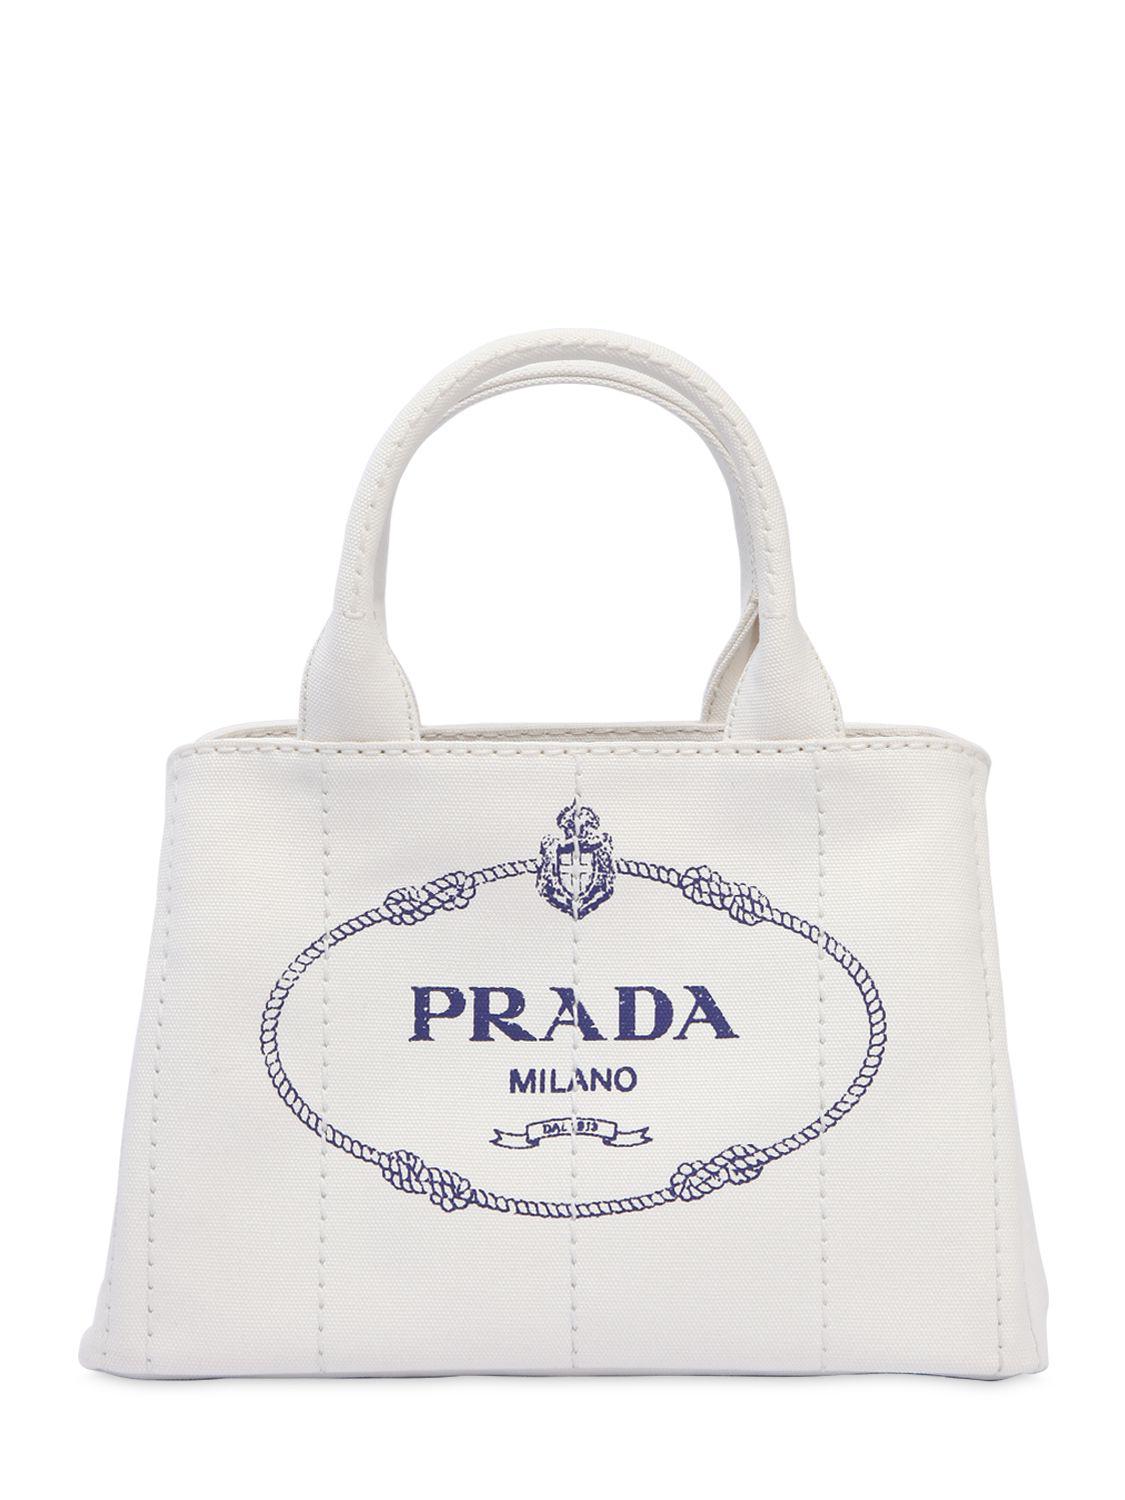 Prada Small Gardener's Cotton Canvas Bag in White | Lyst Australia